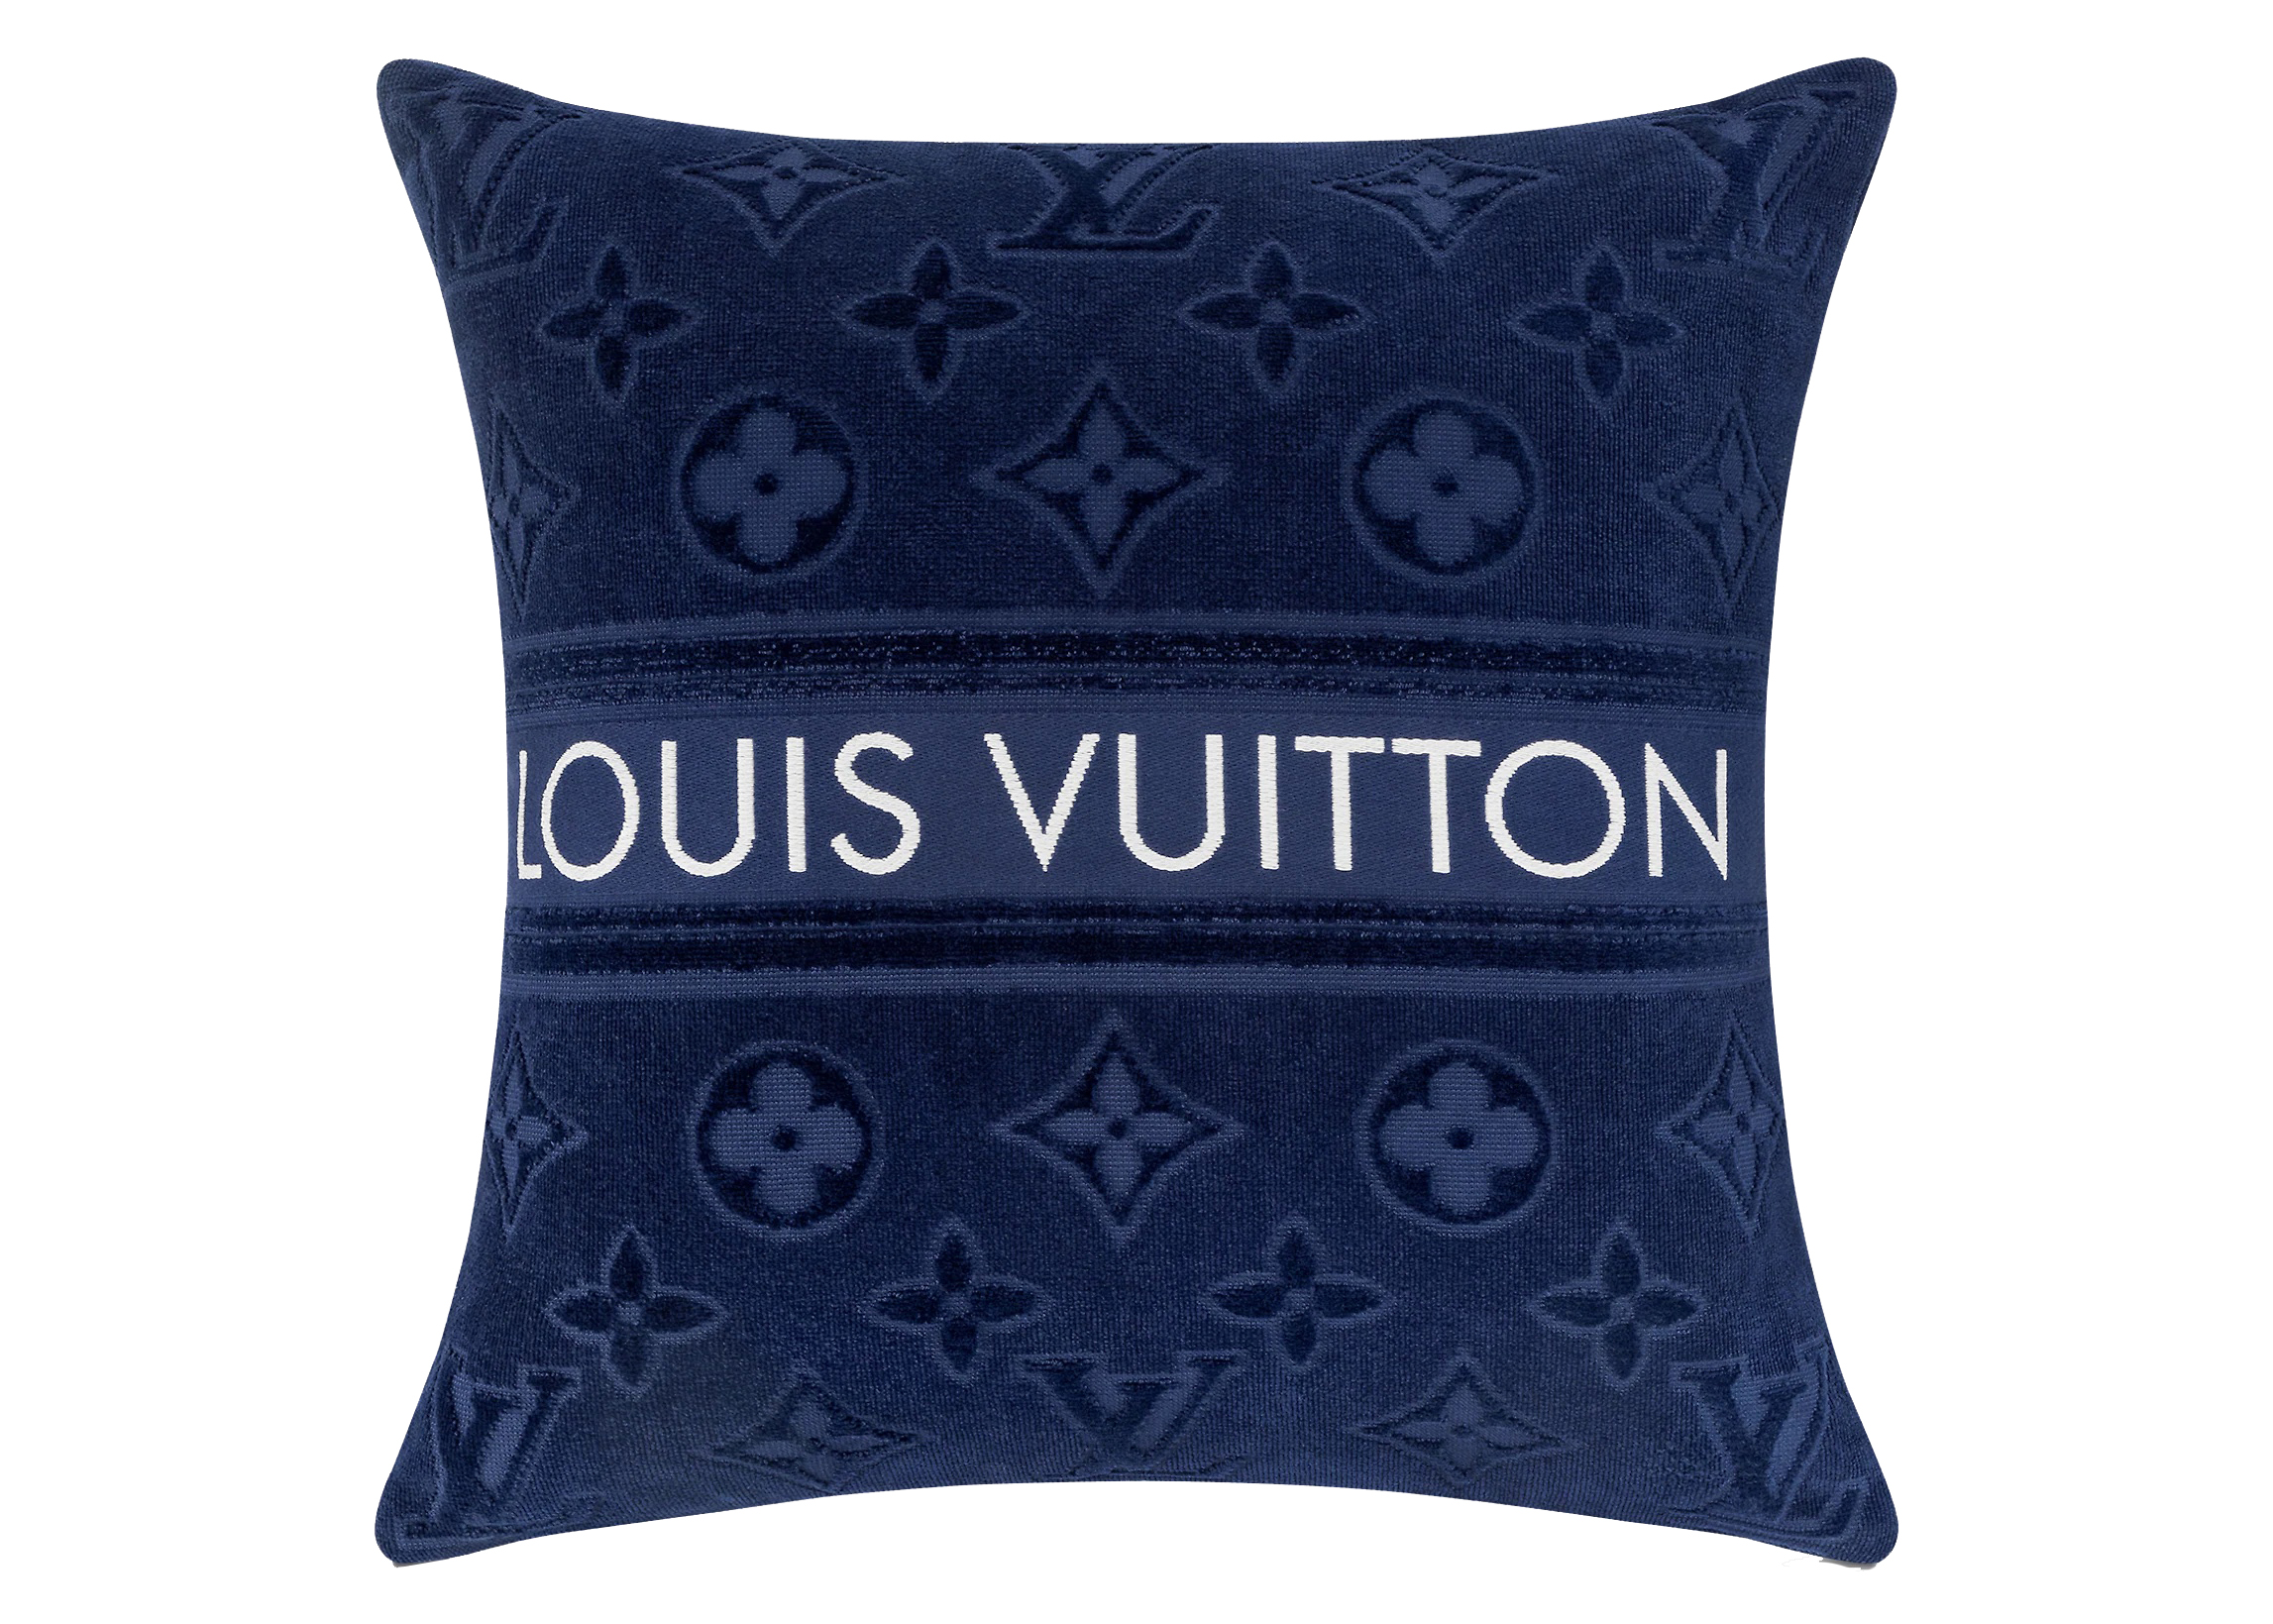 Louis Vuitton ビーチタオル《LVacation》ピンク コットン 直営 (Louis